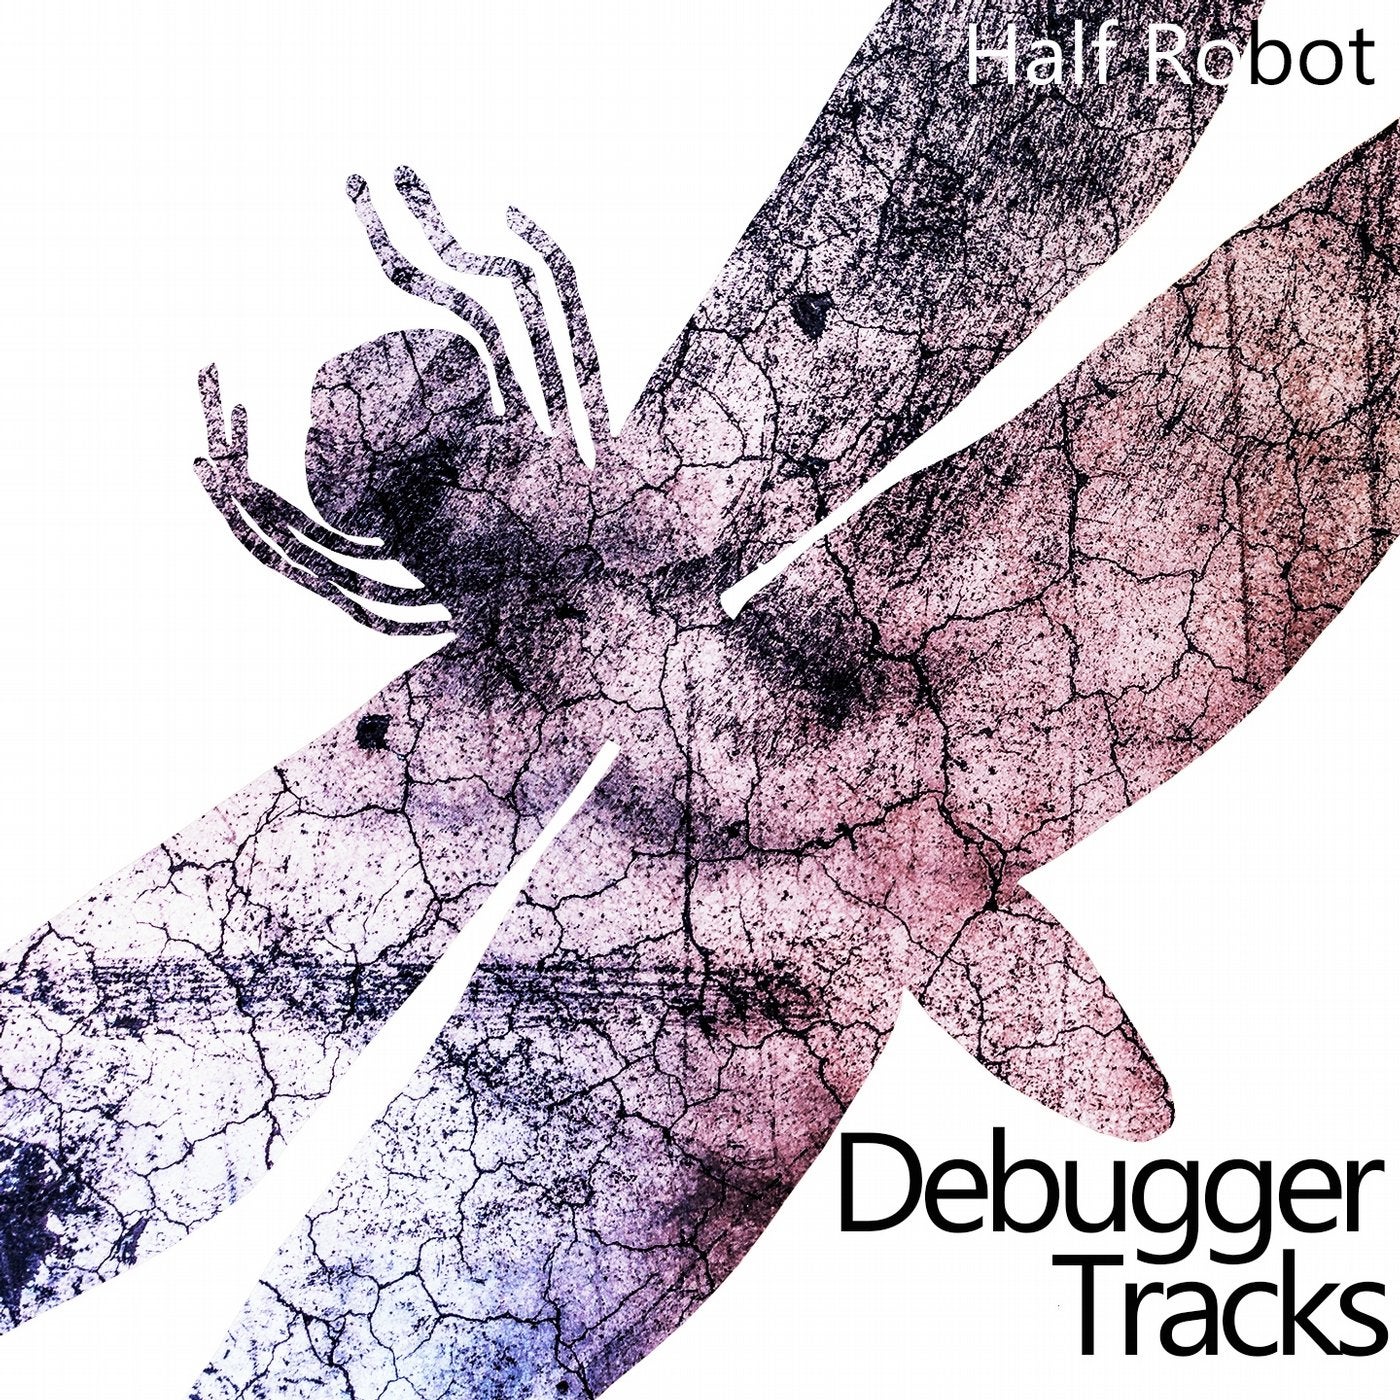 Debugger Tracks